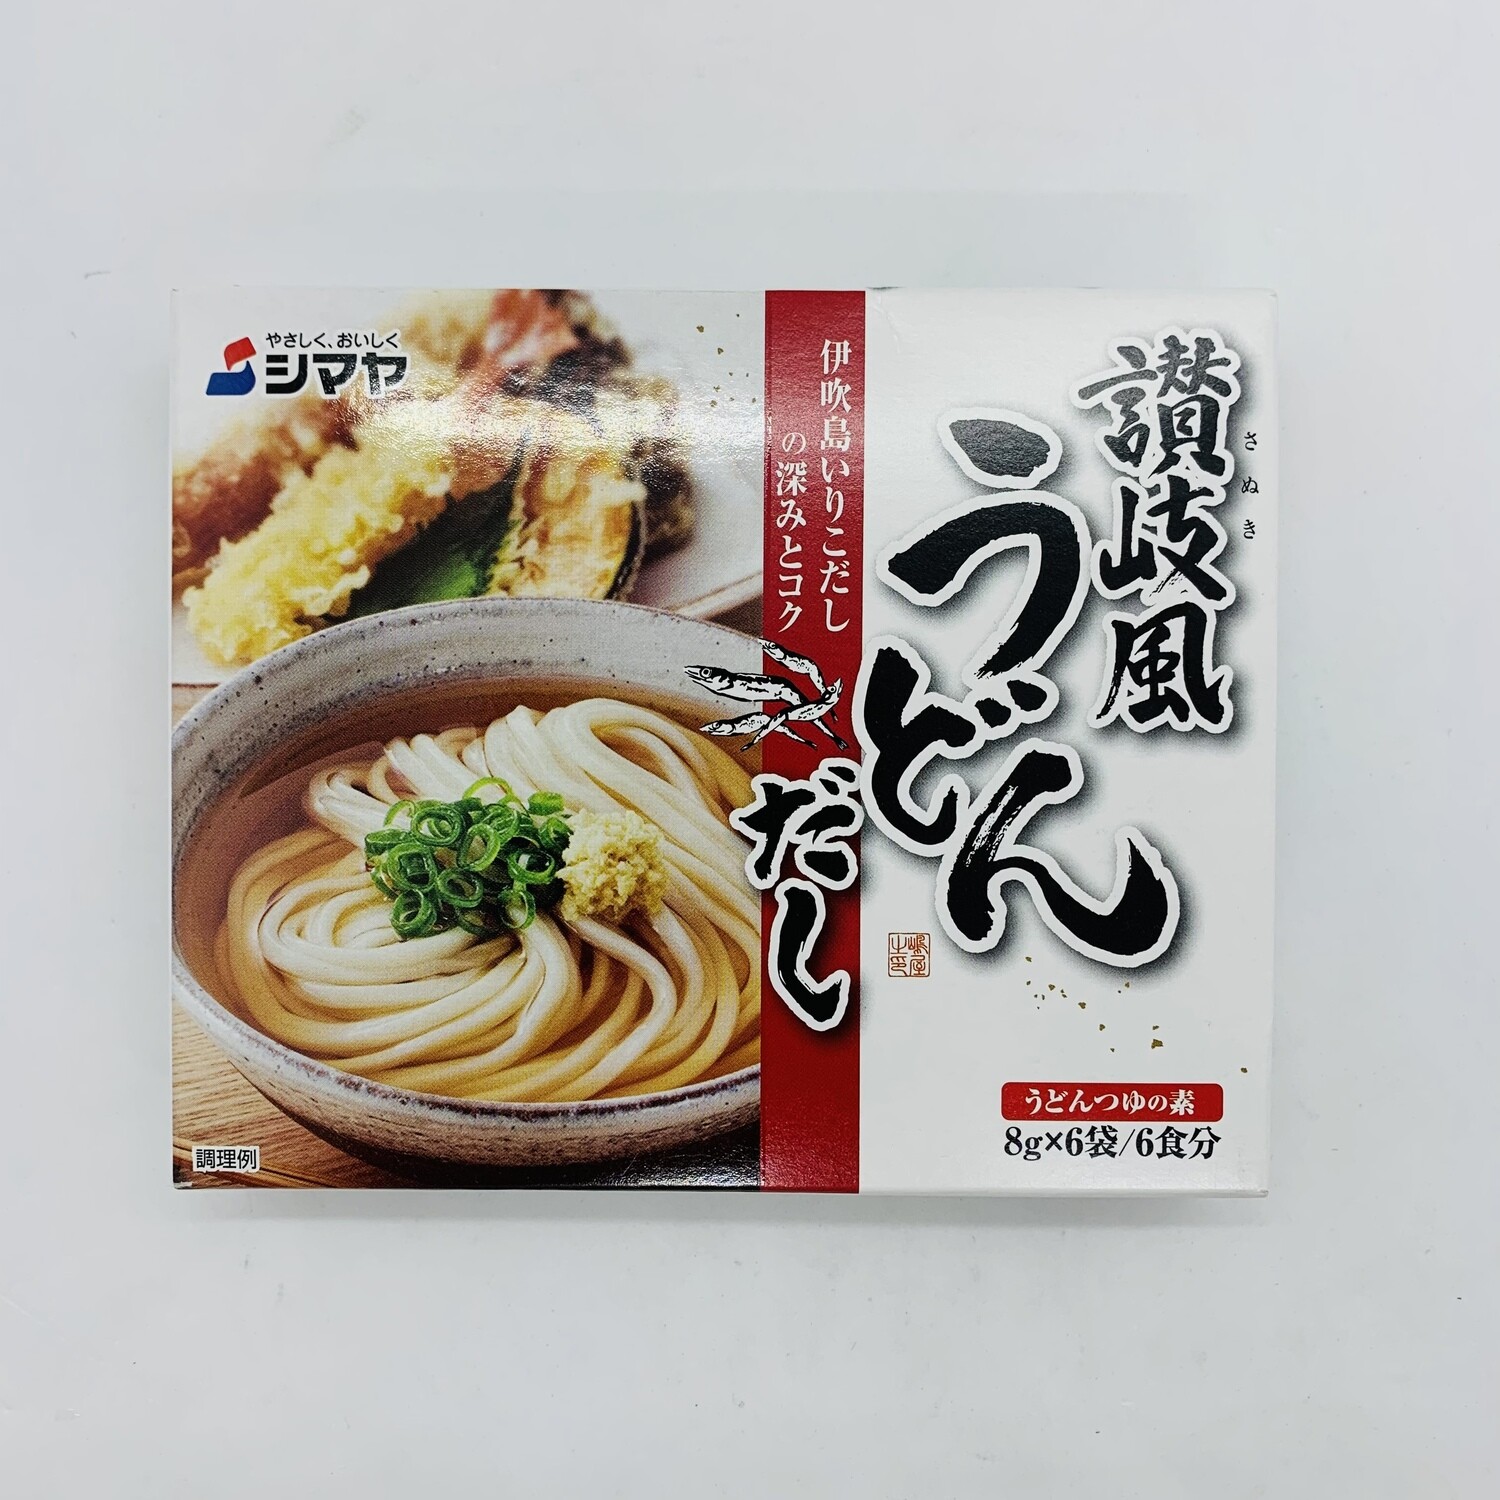 SHIMAYA Udon Soup 8gx6